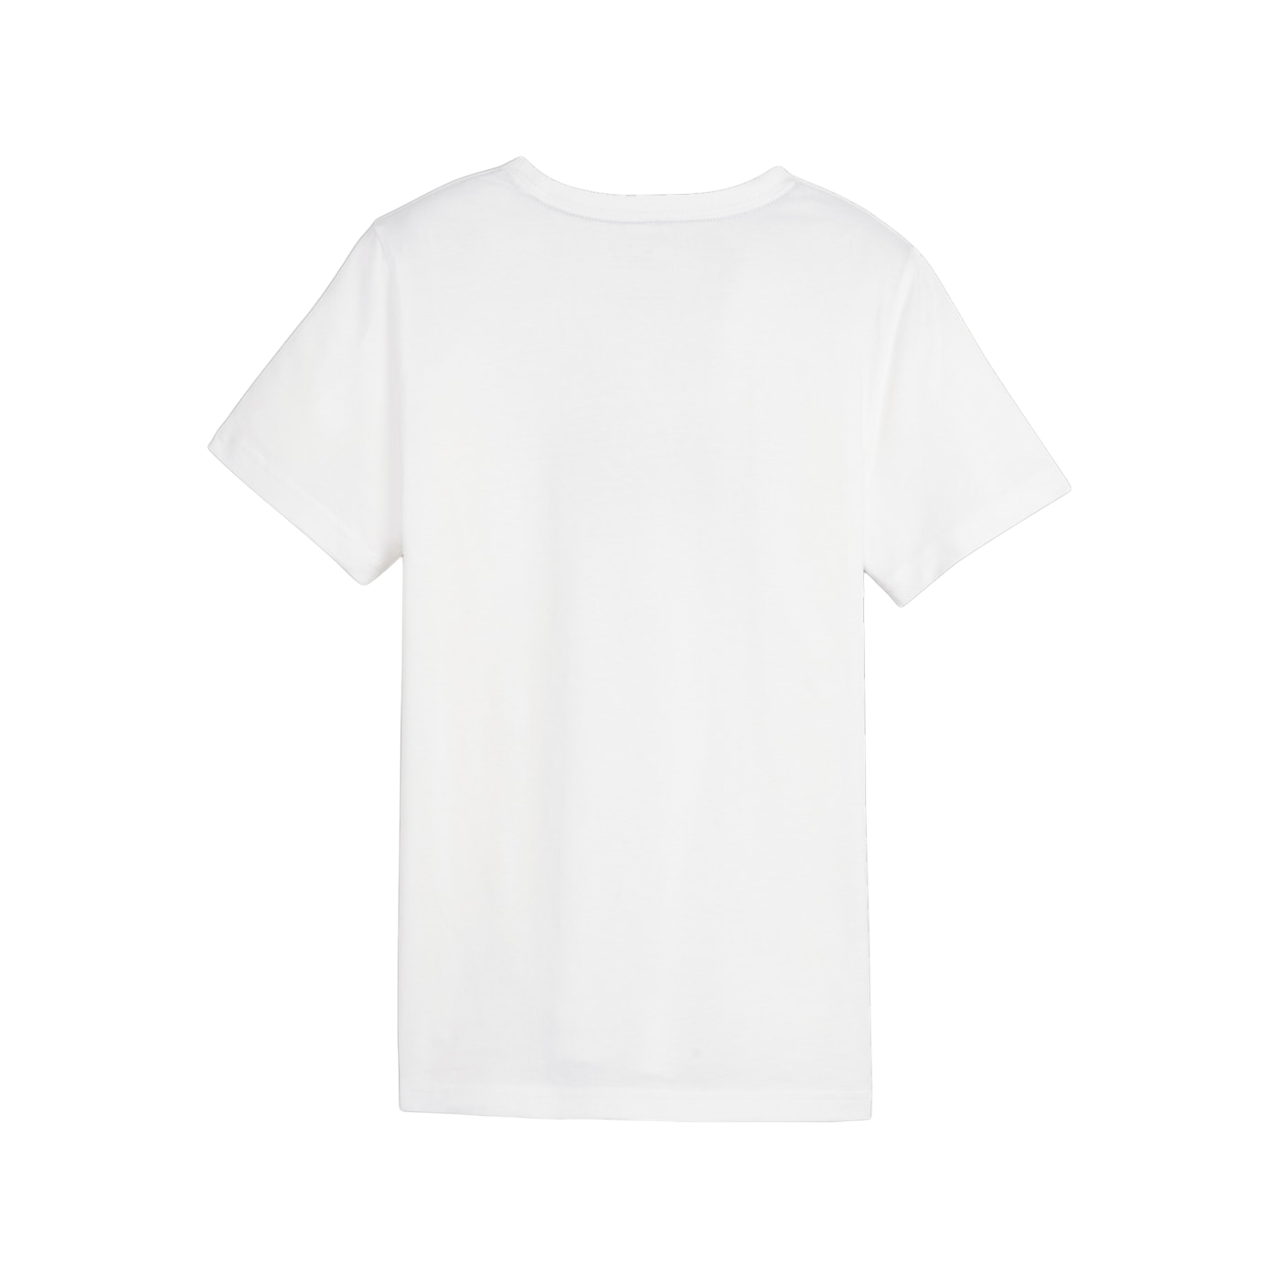 Puma ESS 2 short sleeve t-shirt with large logo print 586985-35 white